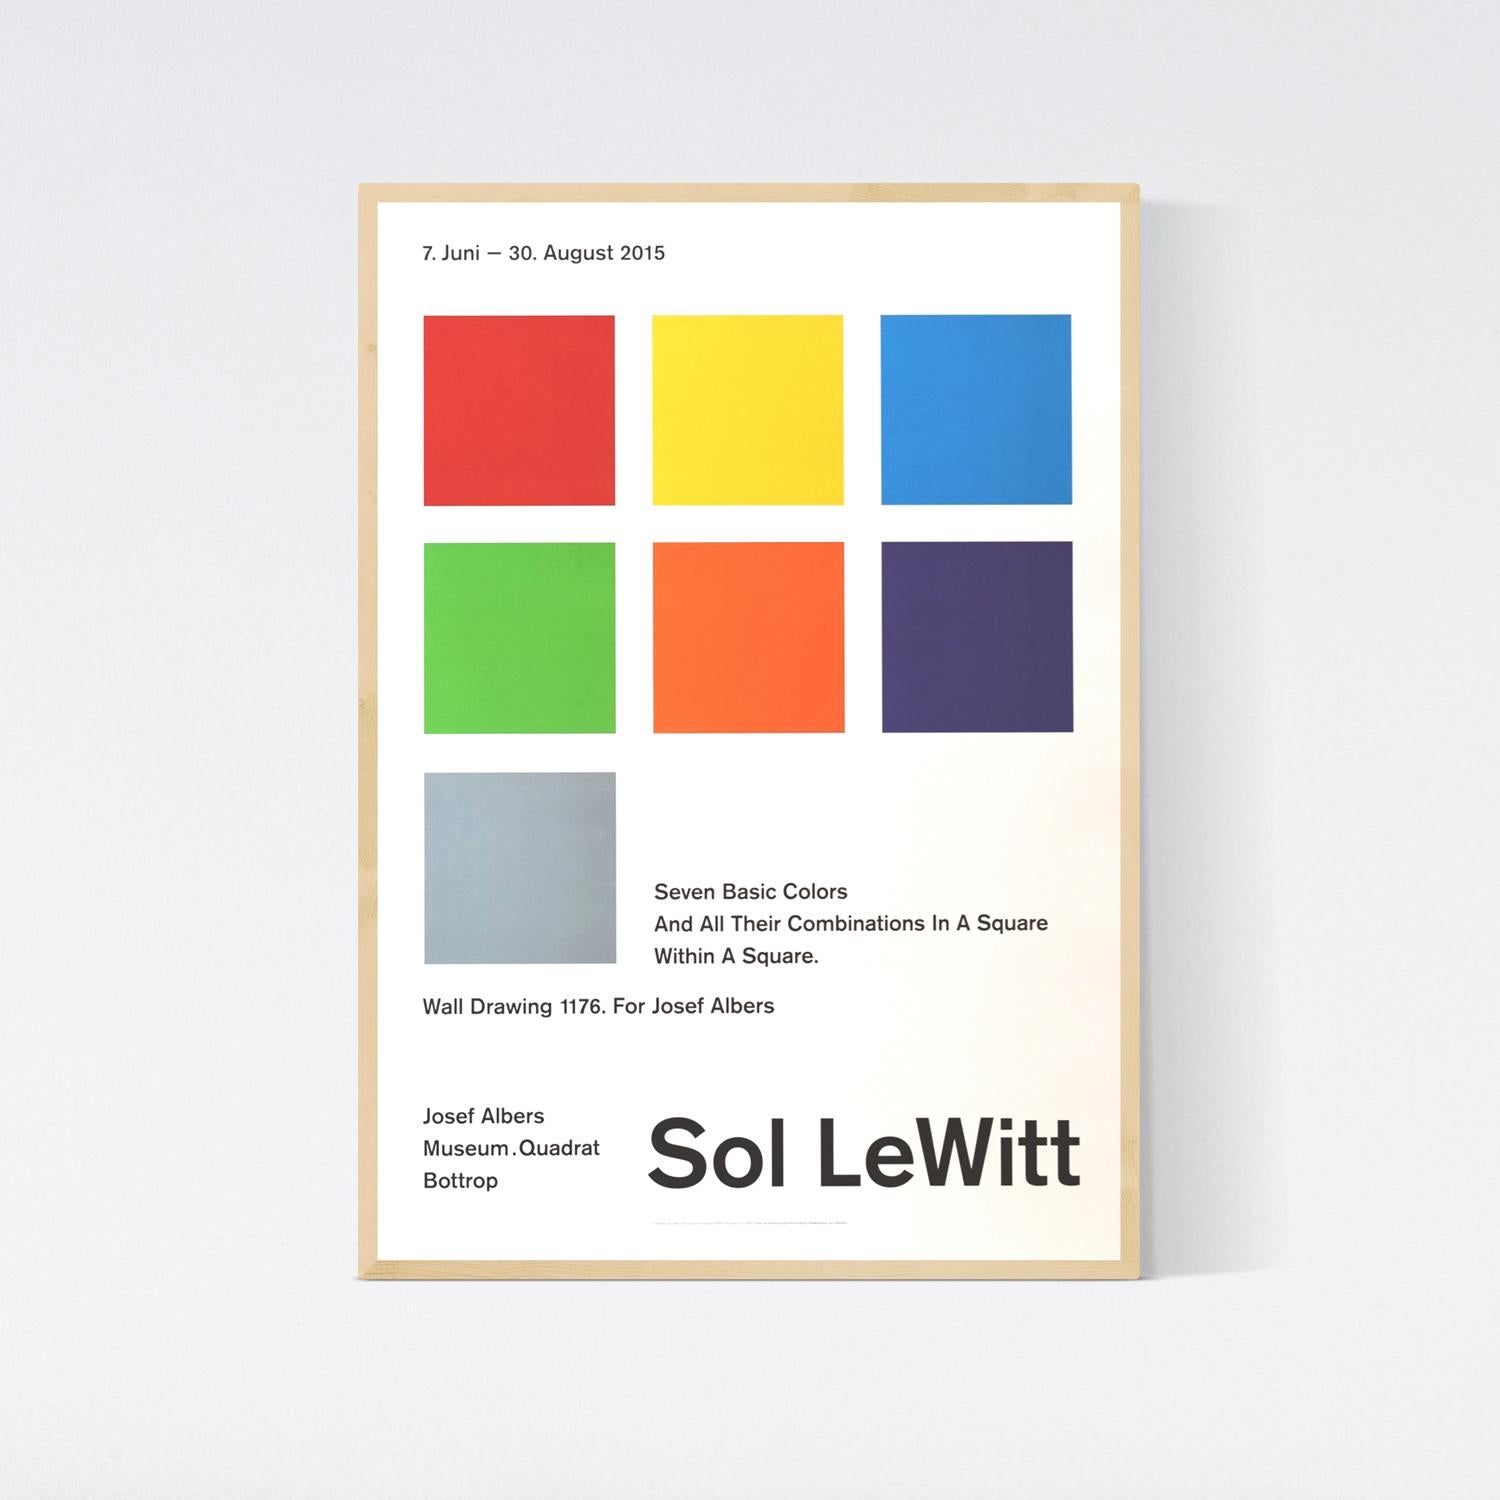 sol lewitt exhibition poster